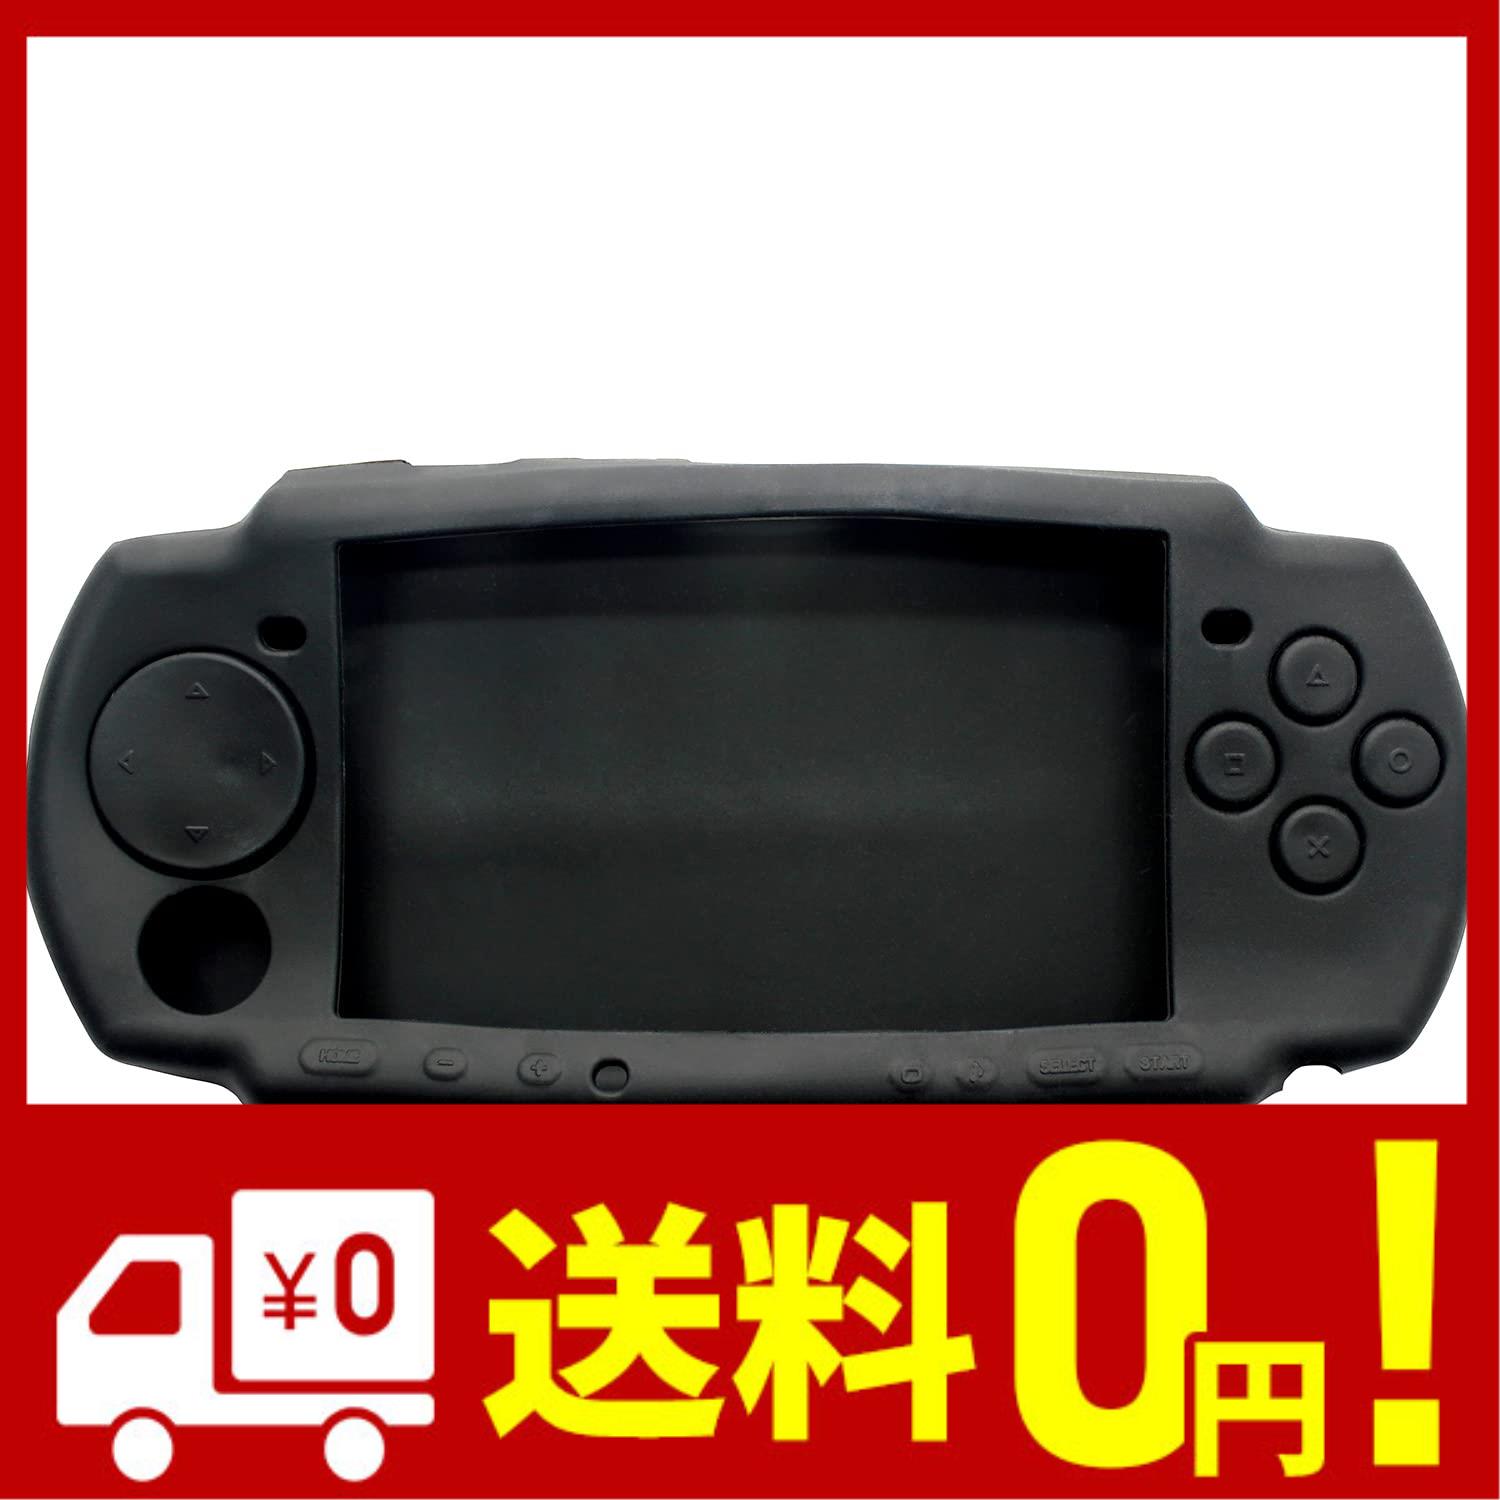 OSTENT ケース プロテクター ソフト プロテクター シリコン トラベル キャリー ケーススキン カバー ポーチスリーブ Sony PSP2000 3000用